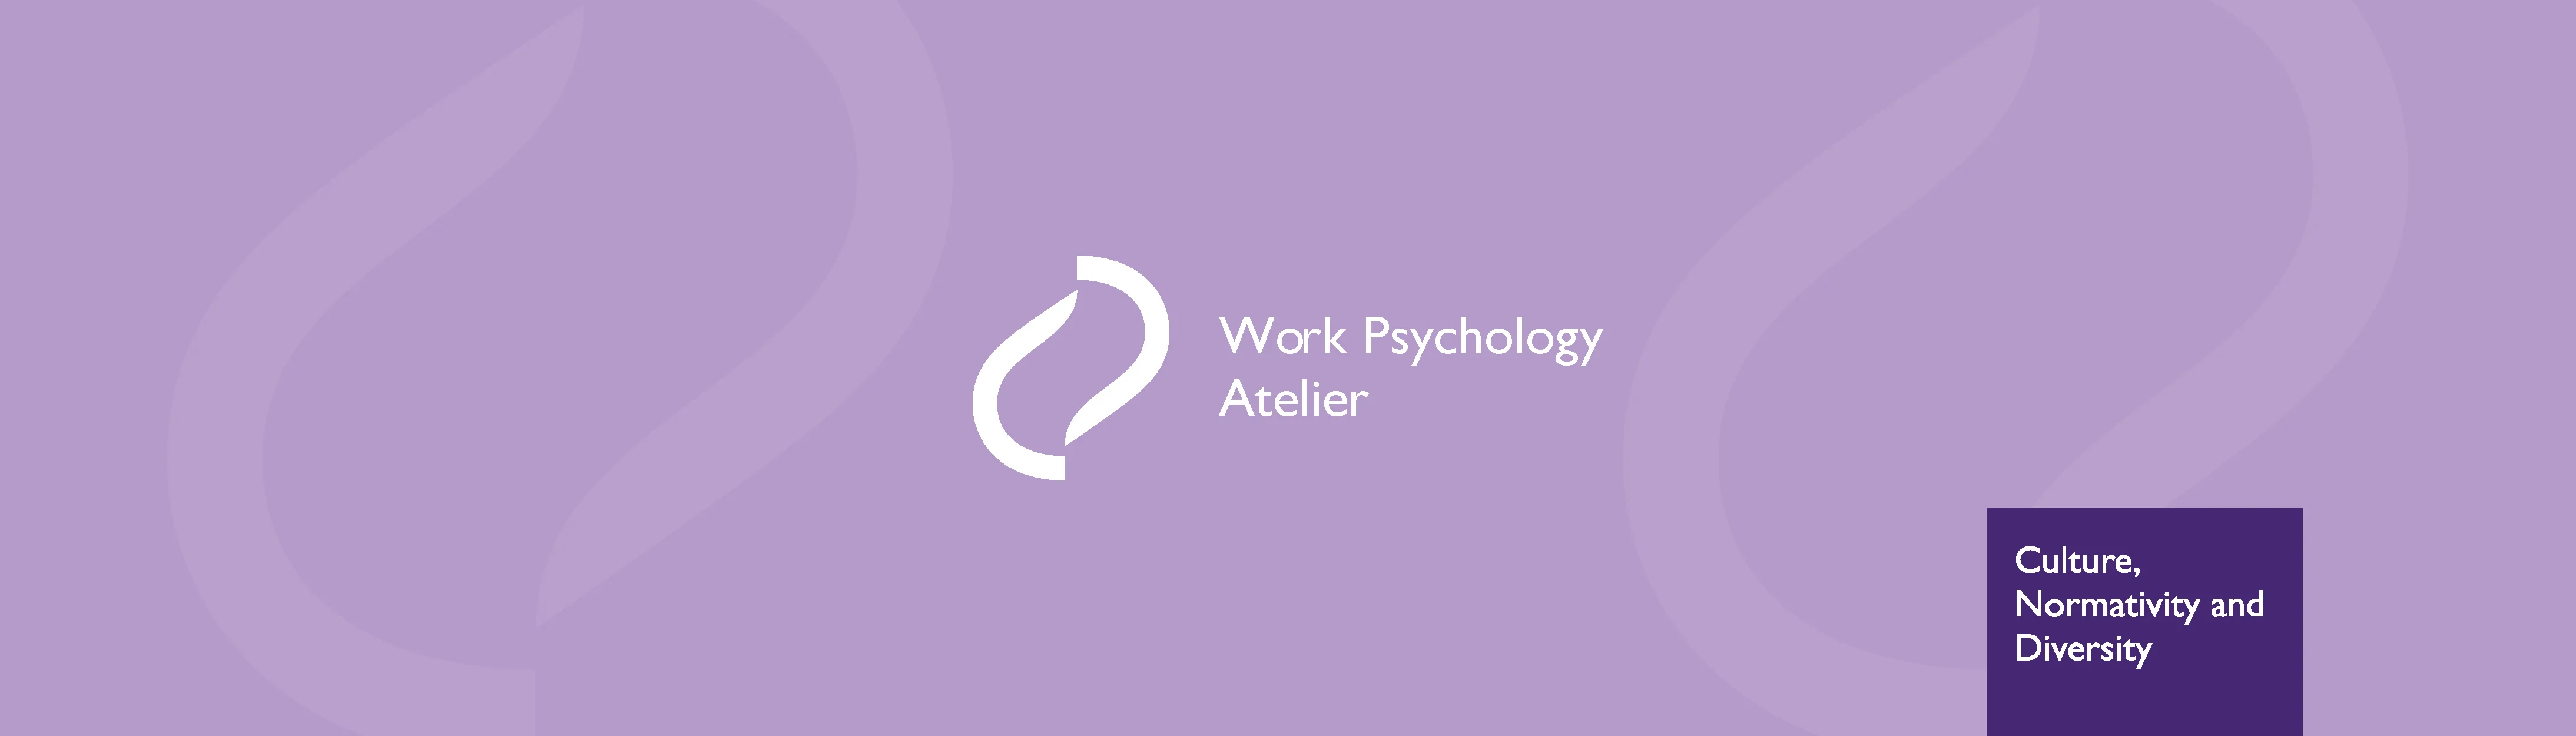 Atelier of Work Psychology logo